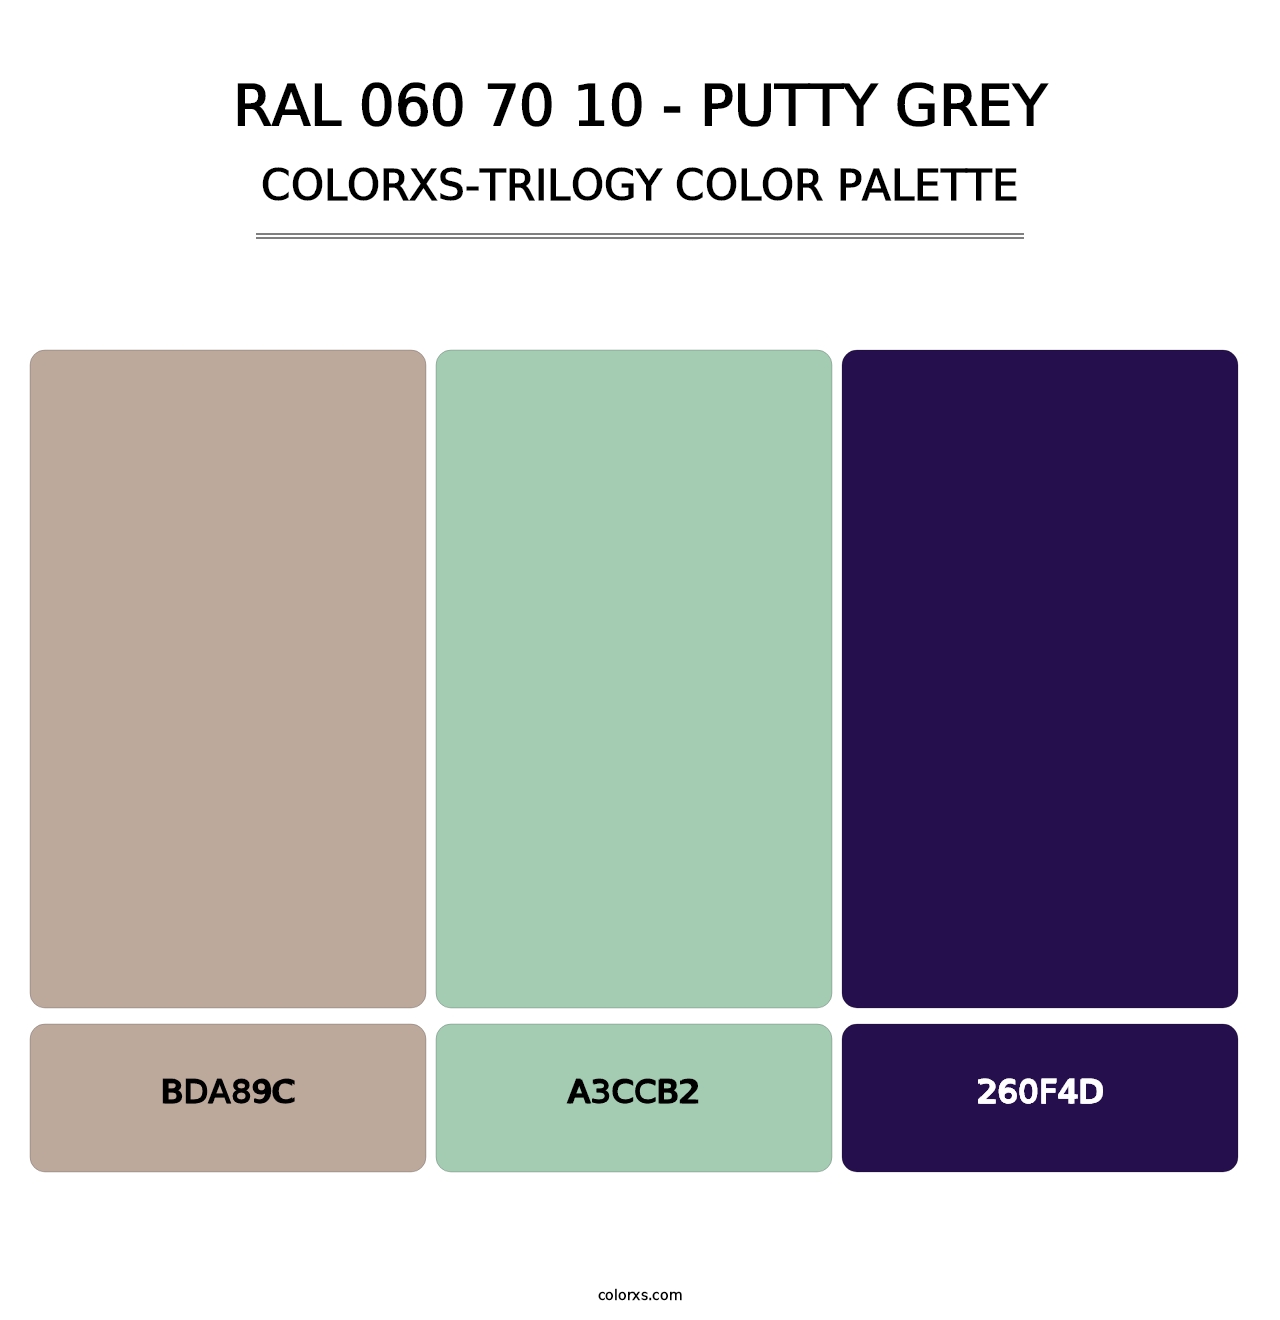 RAL 060 70 10 - Putty Grey - Colorxs Trilogy Palette